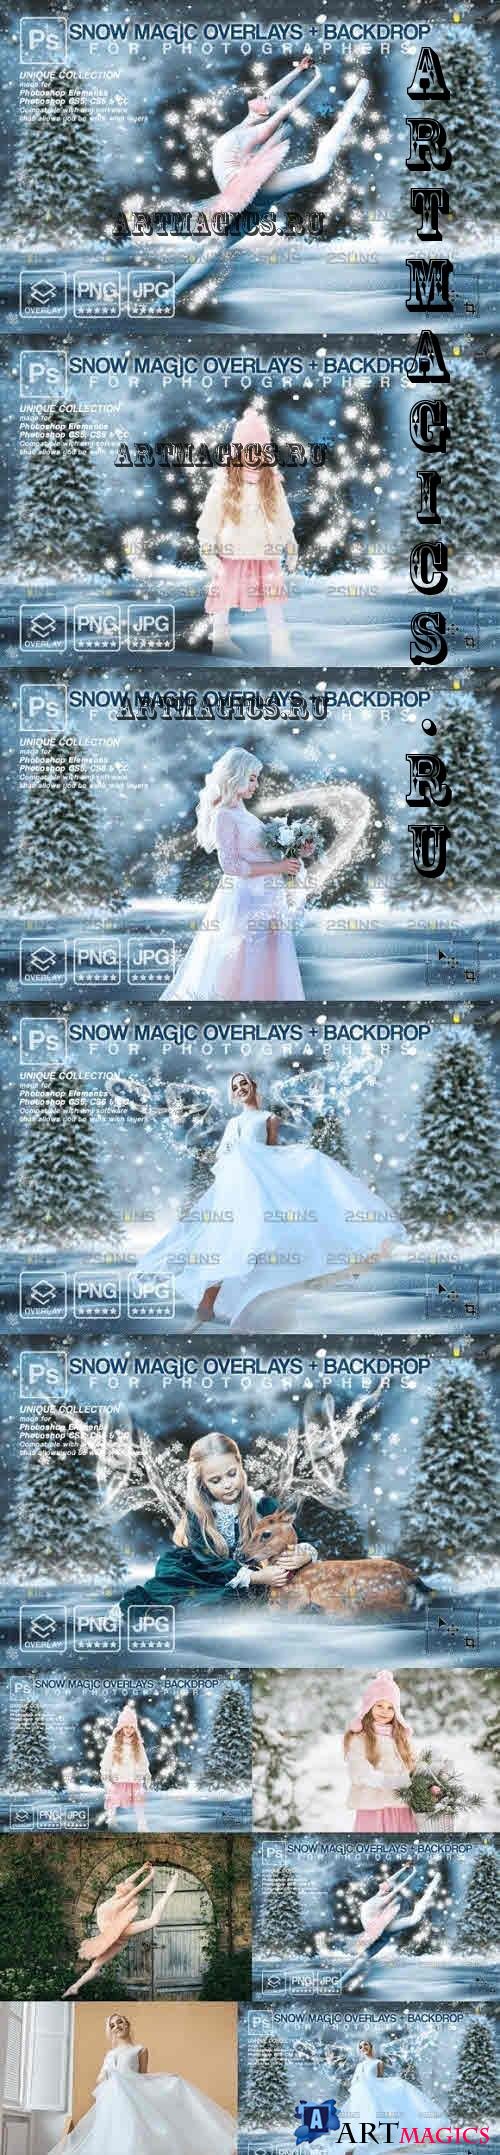 Snow Magic Overlays, Snow flake overlays, Photoshop overlay V01 - 2317165